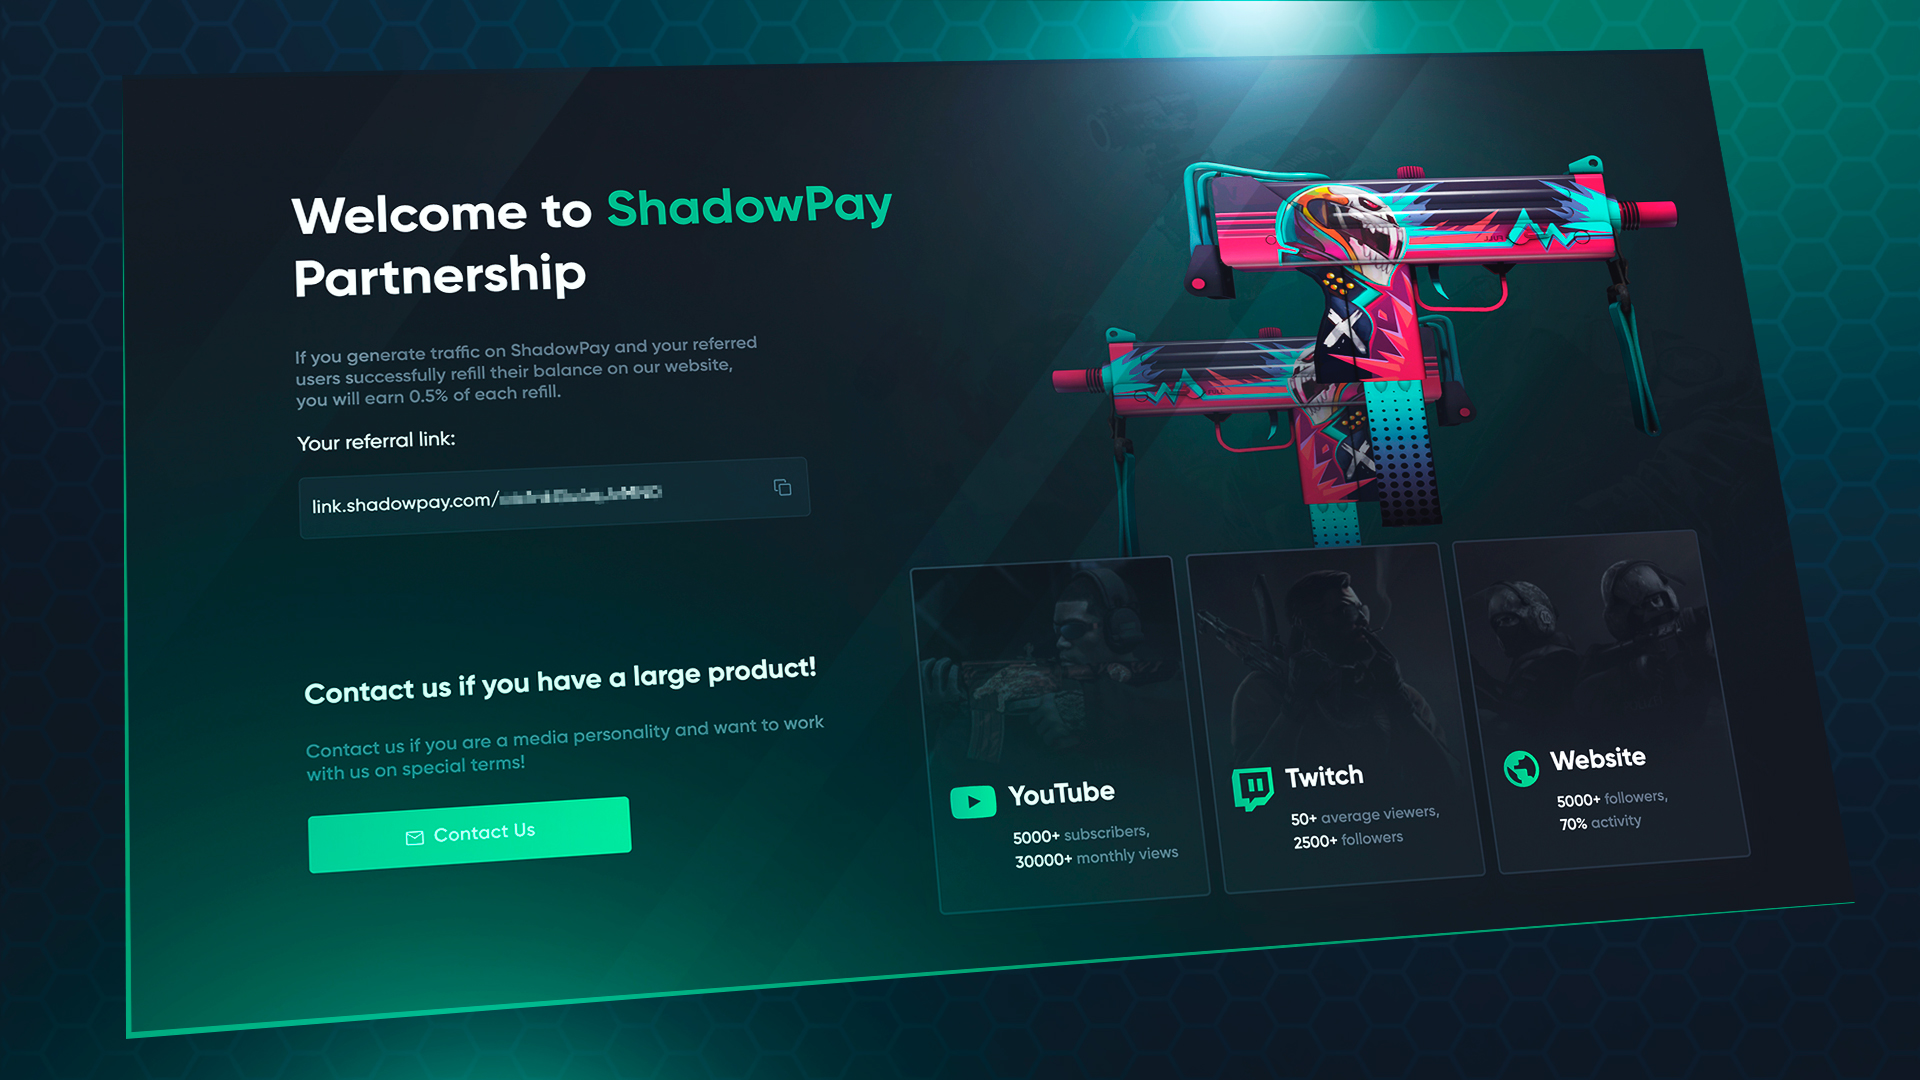 Shadowpay.com $50 Pre-paid Card